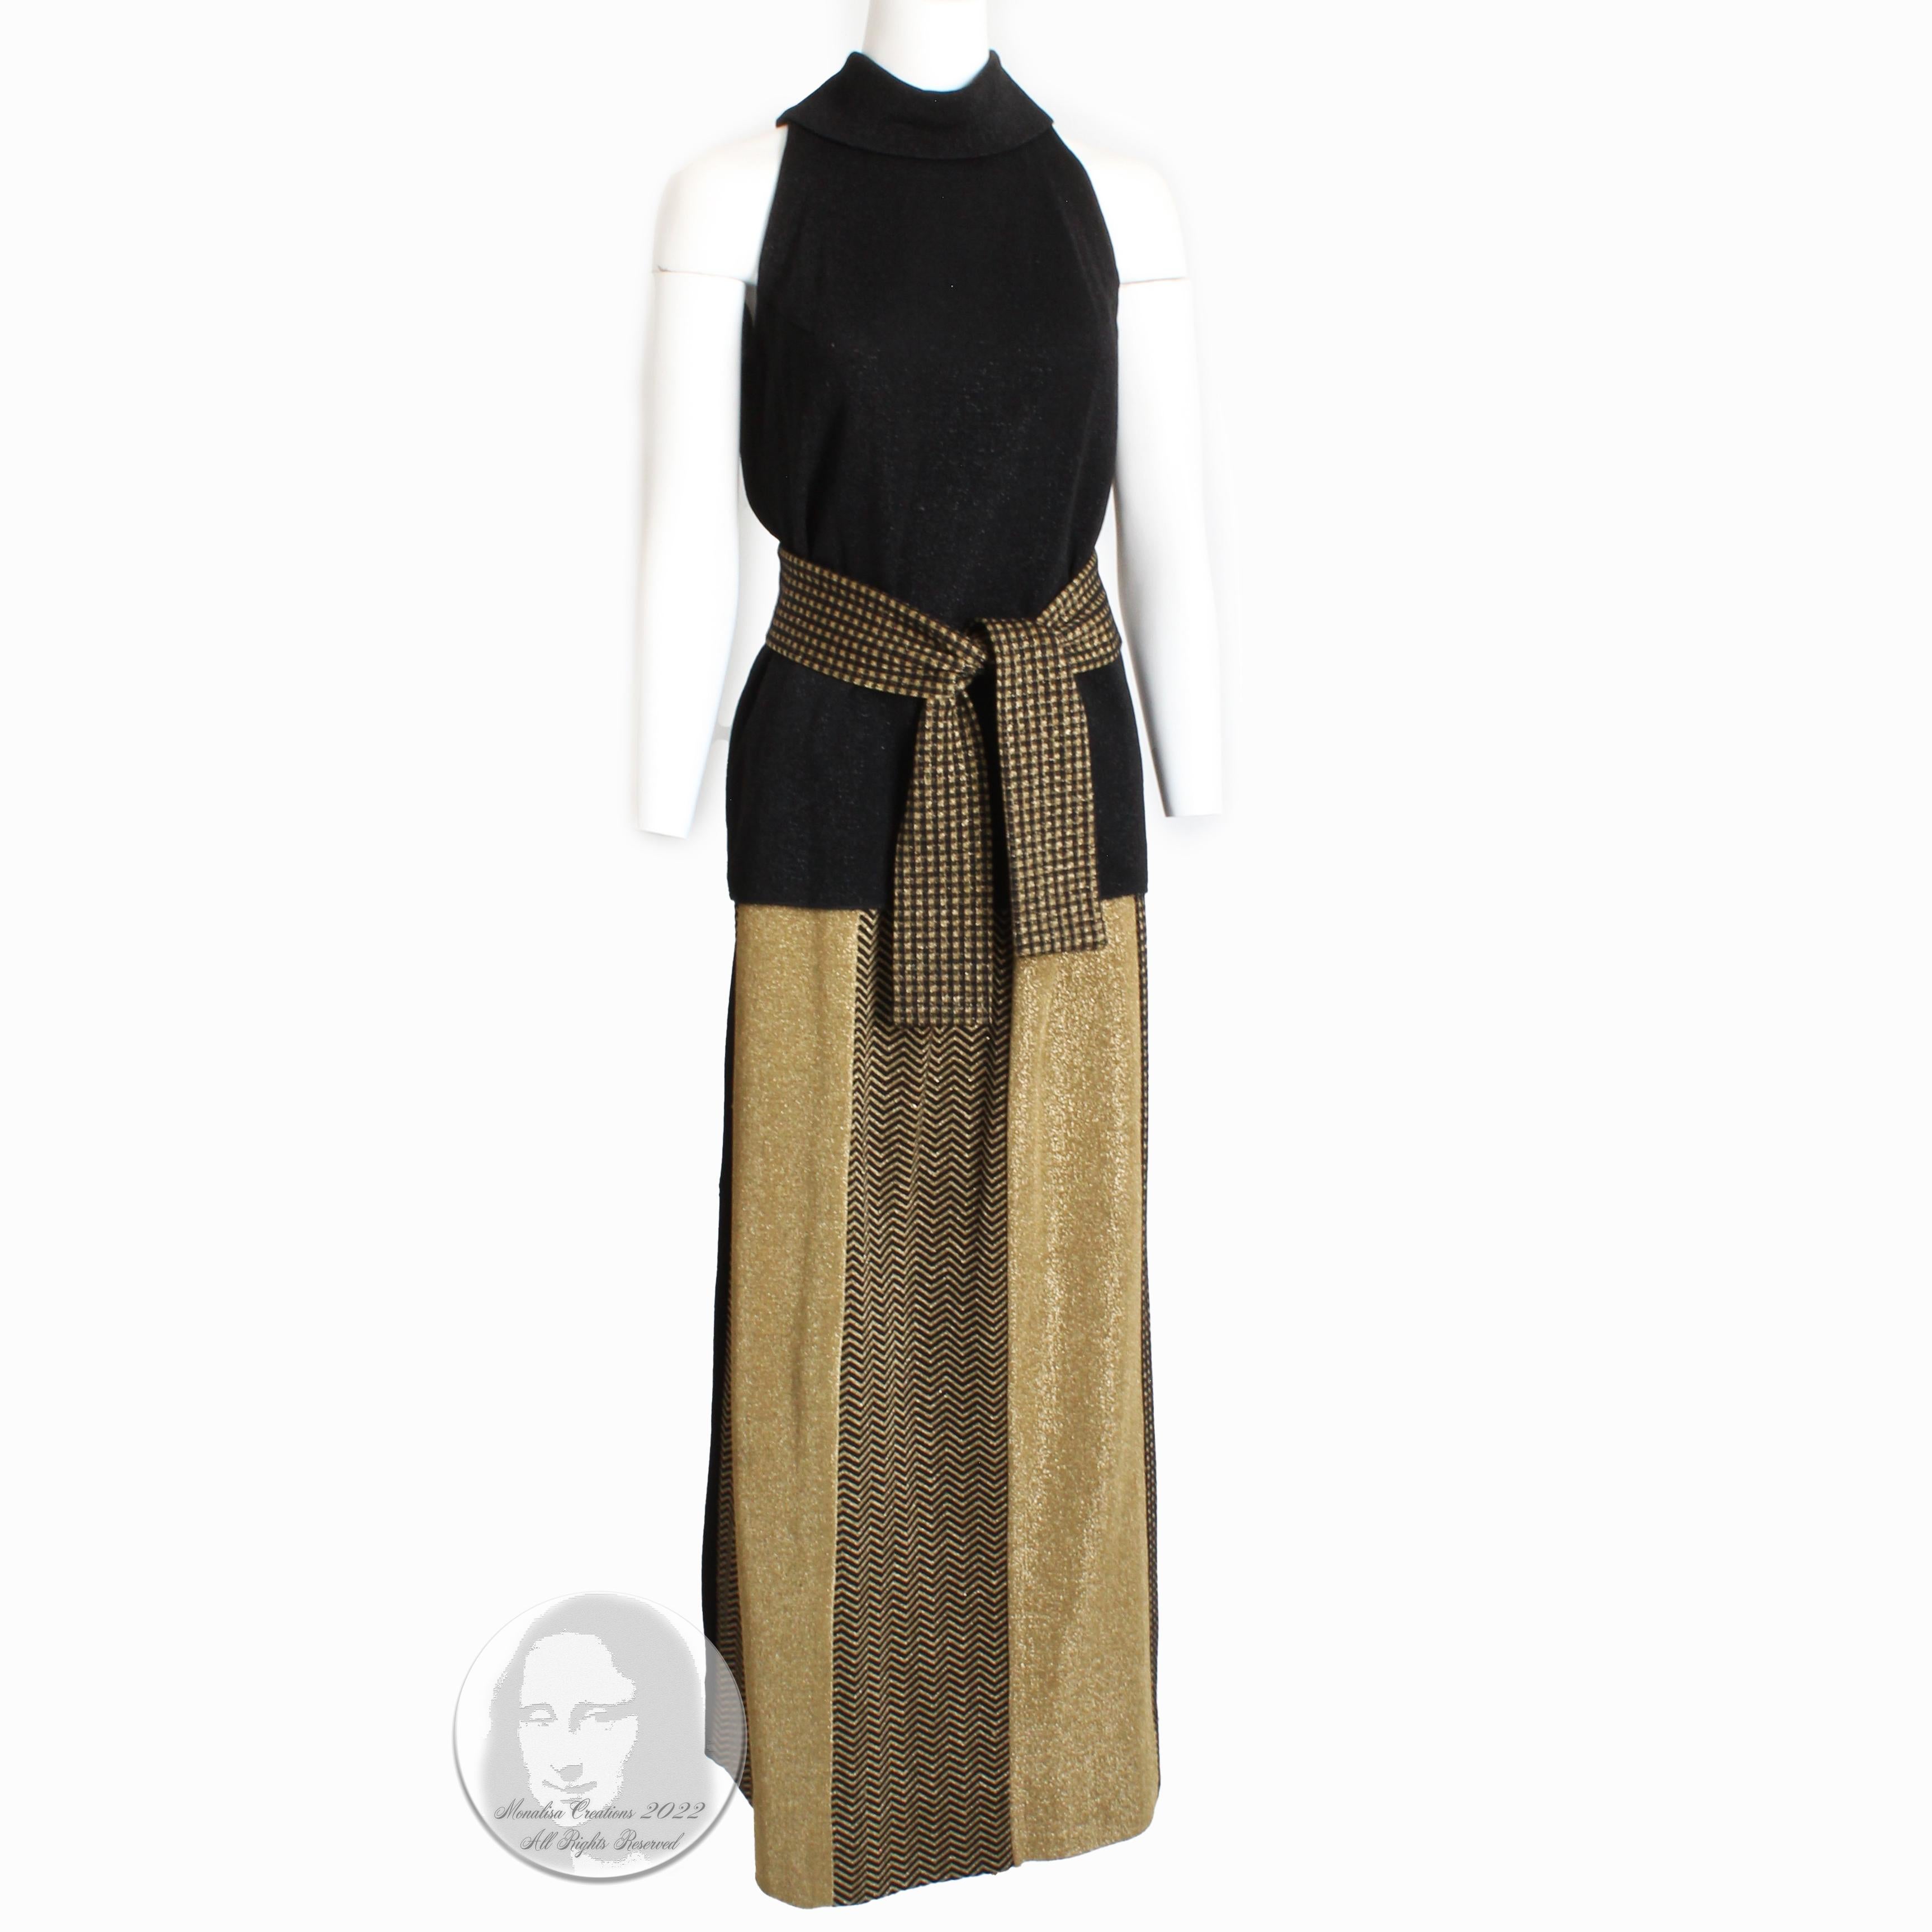 Rudi Gernreich 3pc Set Top Skirt and Sash Belt Black Gold Metallic Knit Suit 70s For Sale 3